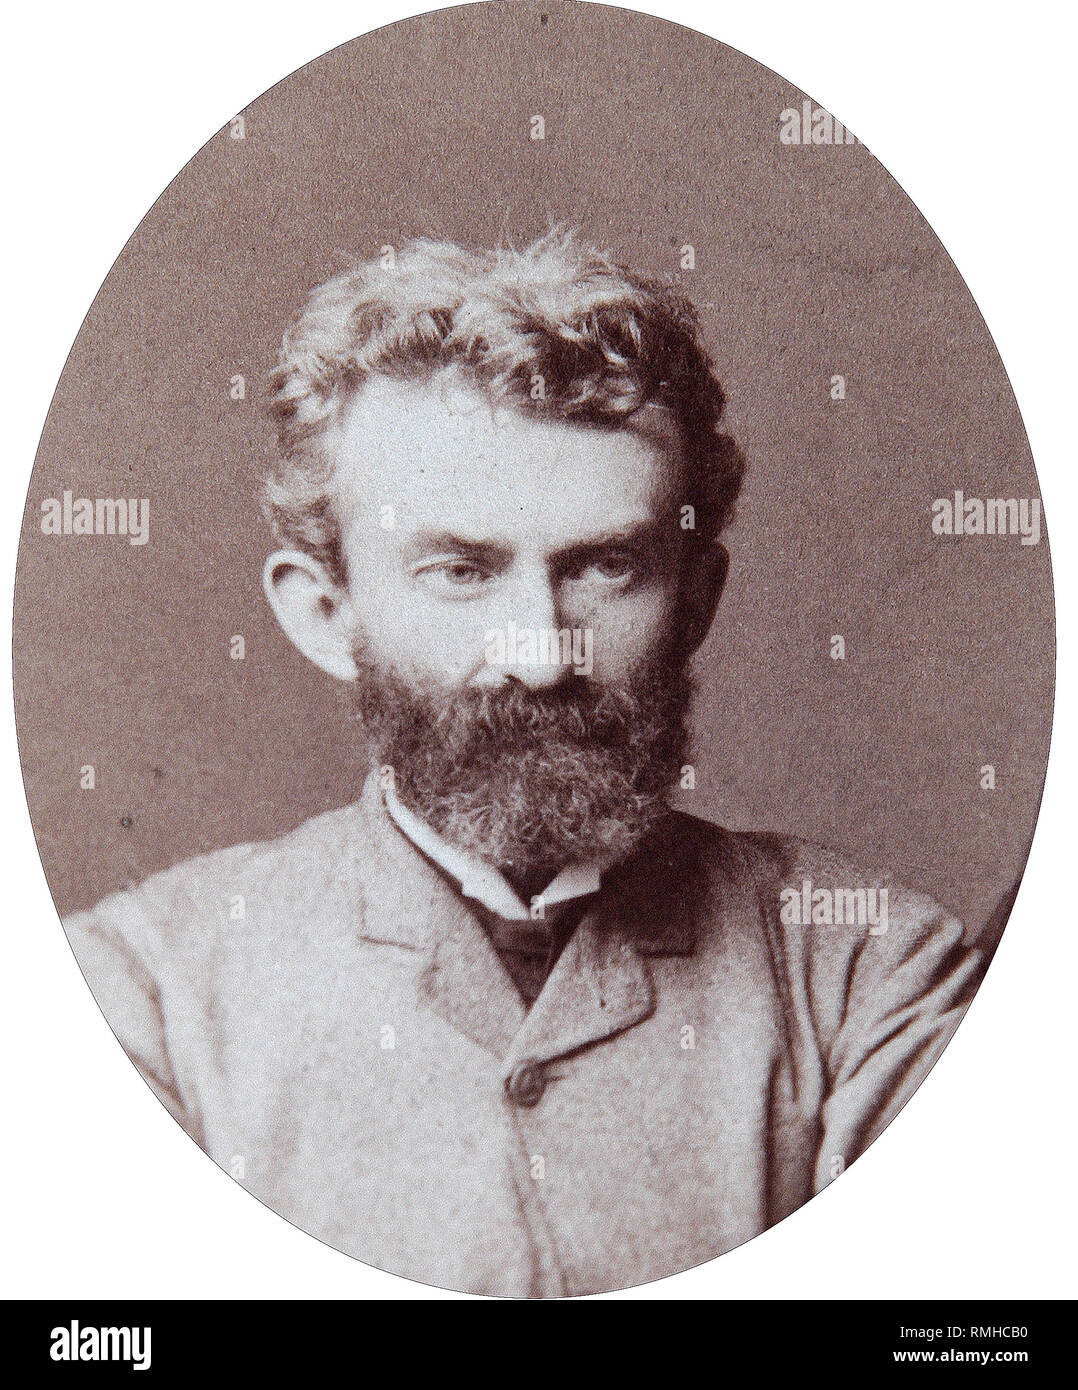 Ritratto dell'etnologo, antropologo e biologo Nicholai Miklukho-Maklai (1846-1888). Phototypie Foto Stock